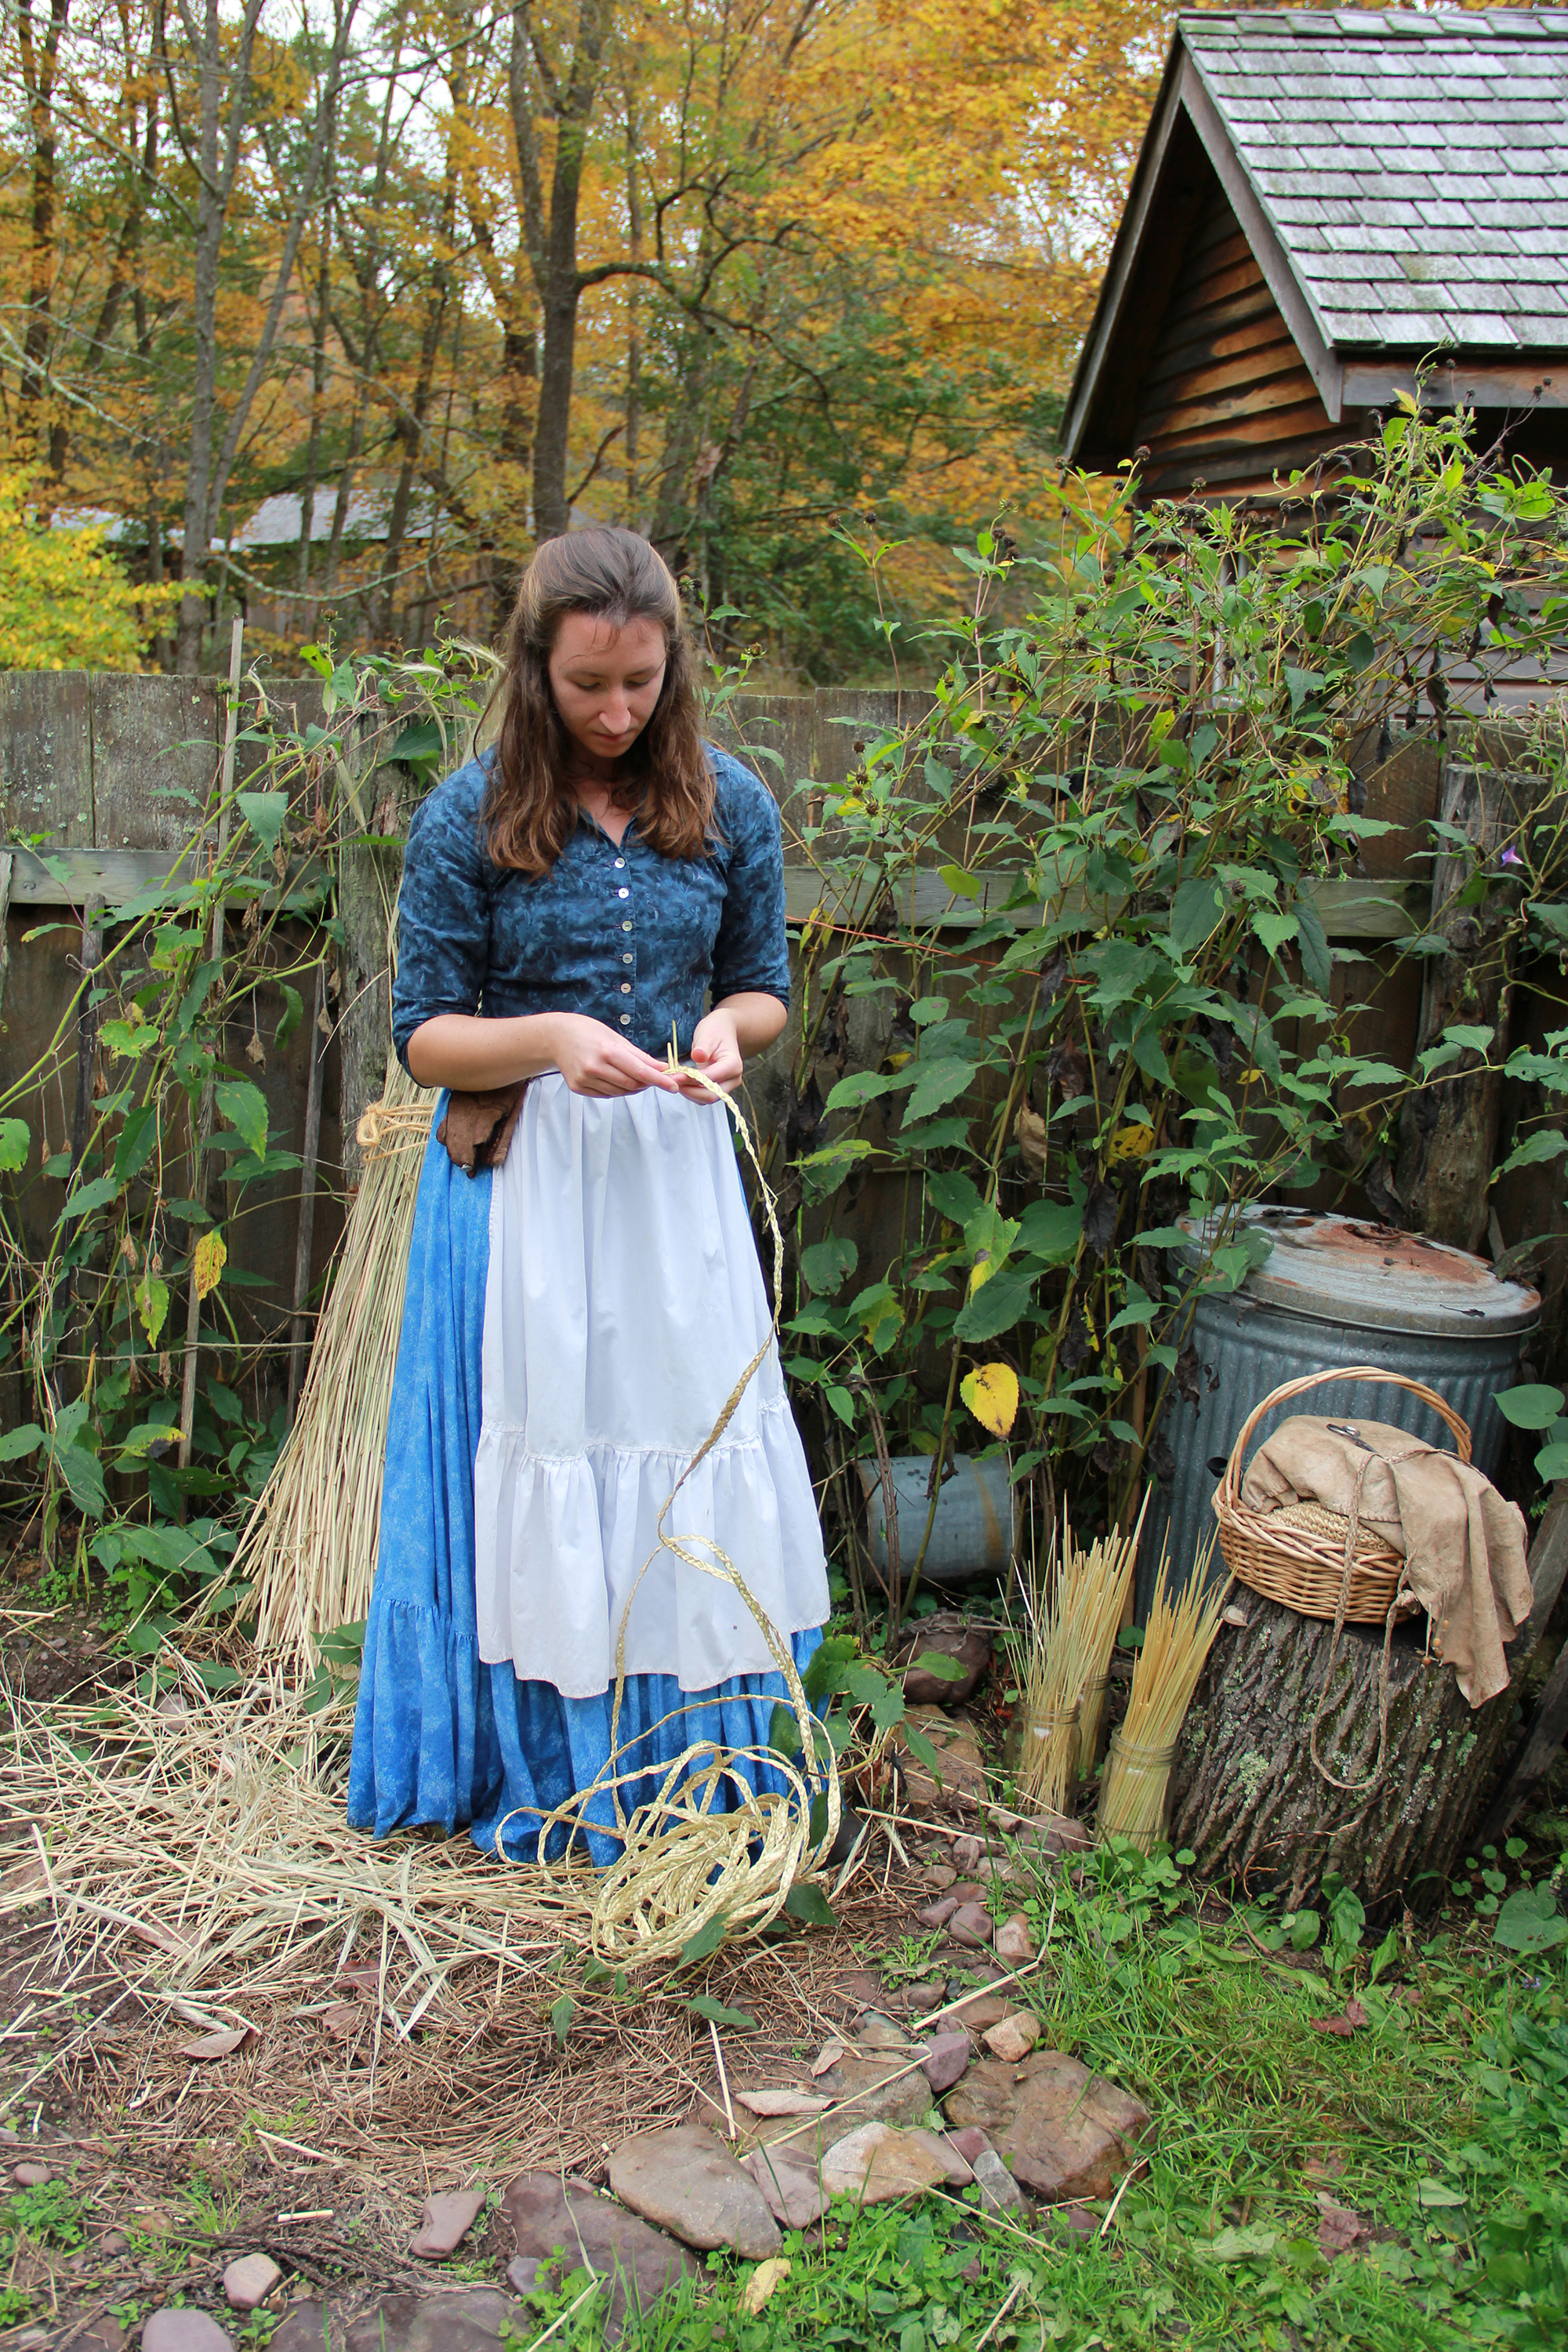 A woman braids rye straw for hatmaking